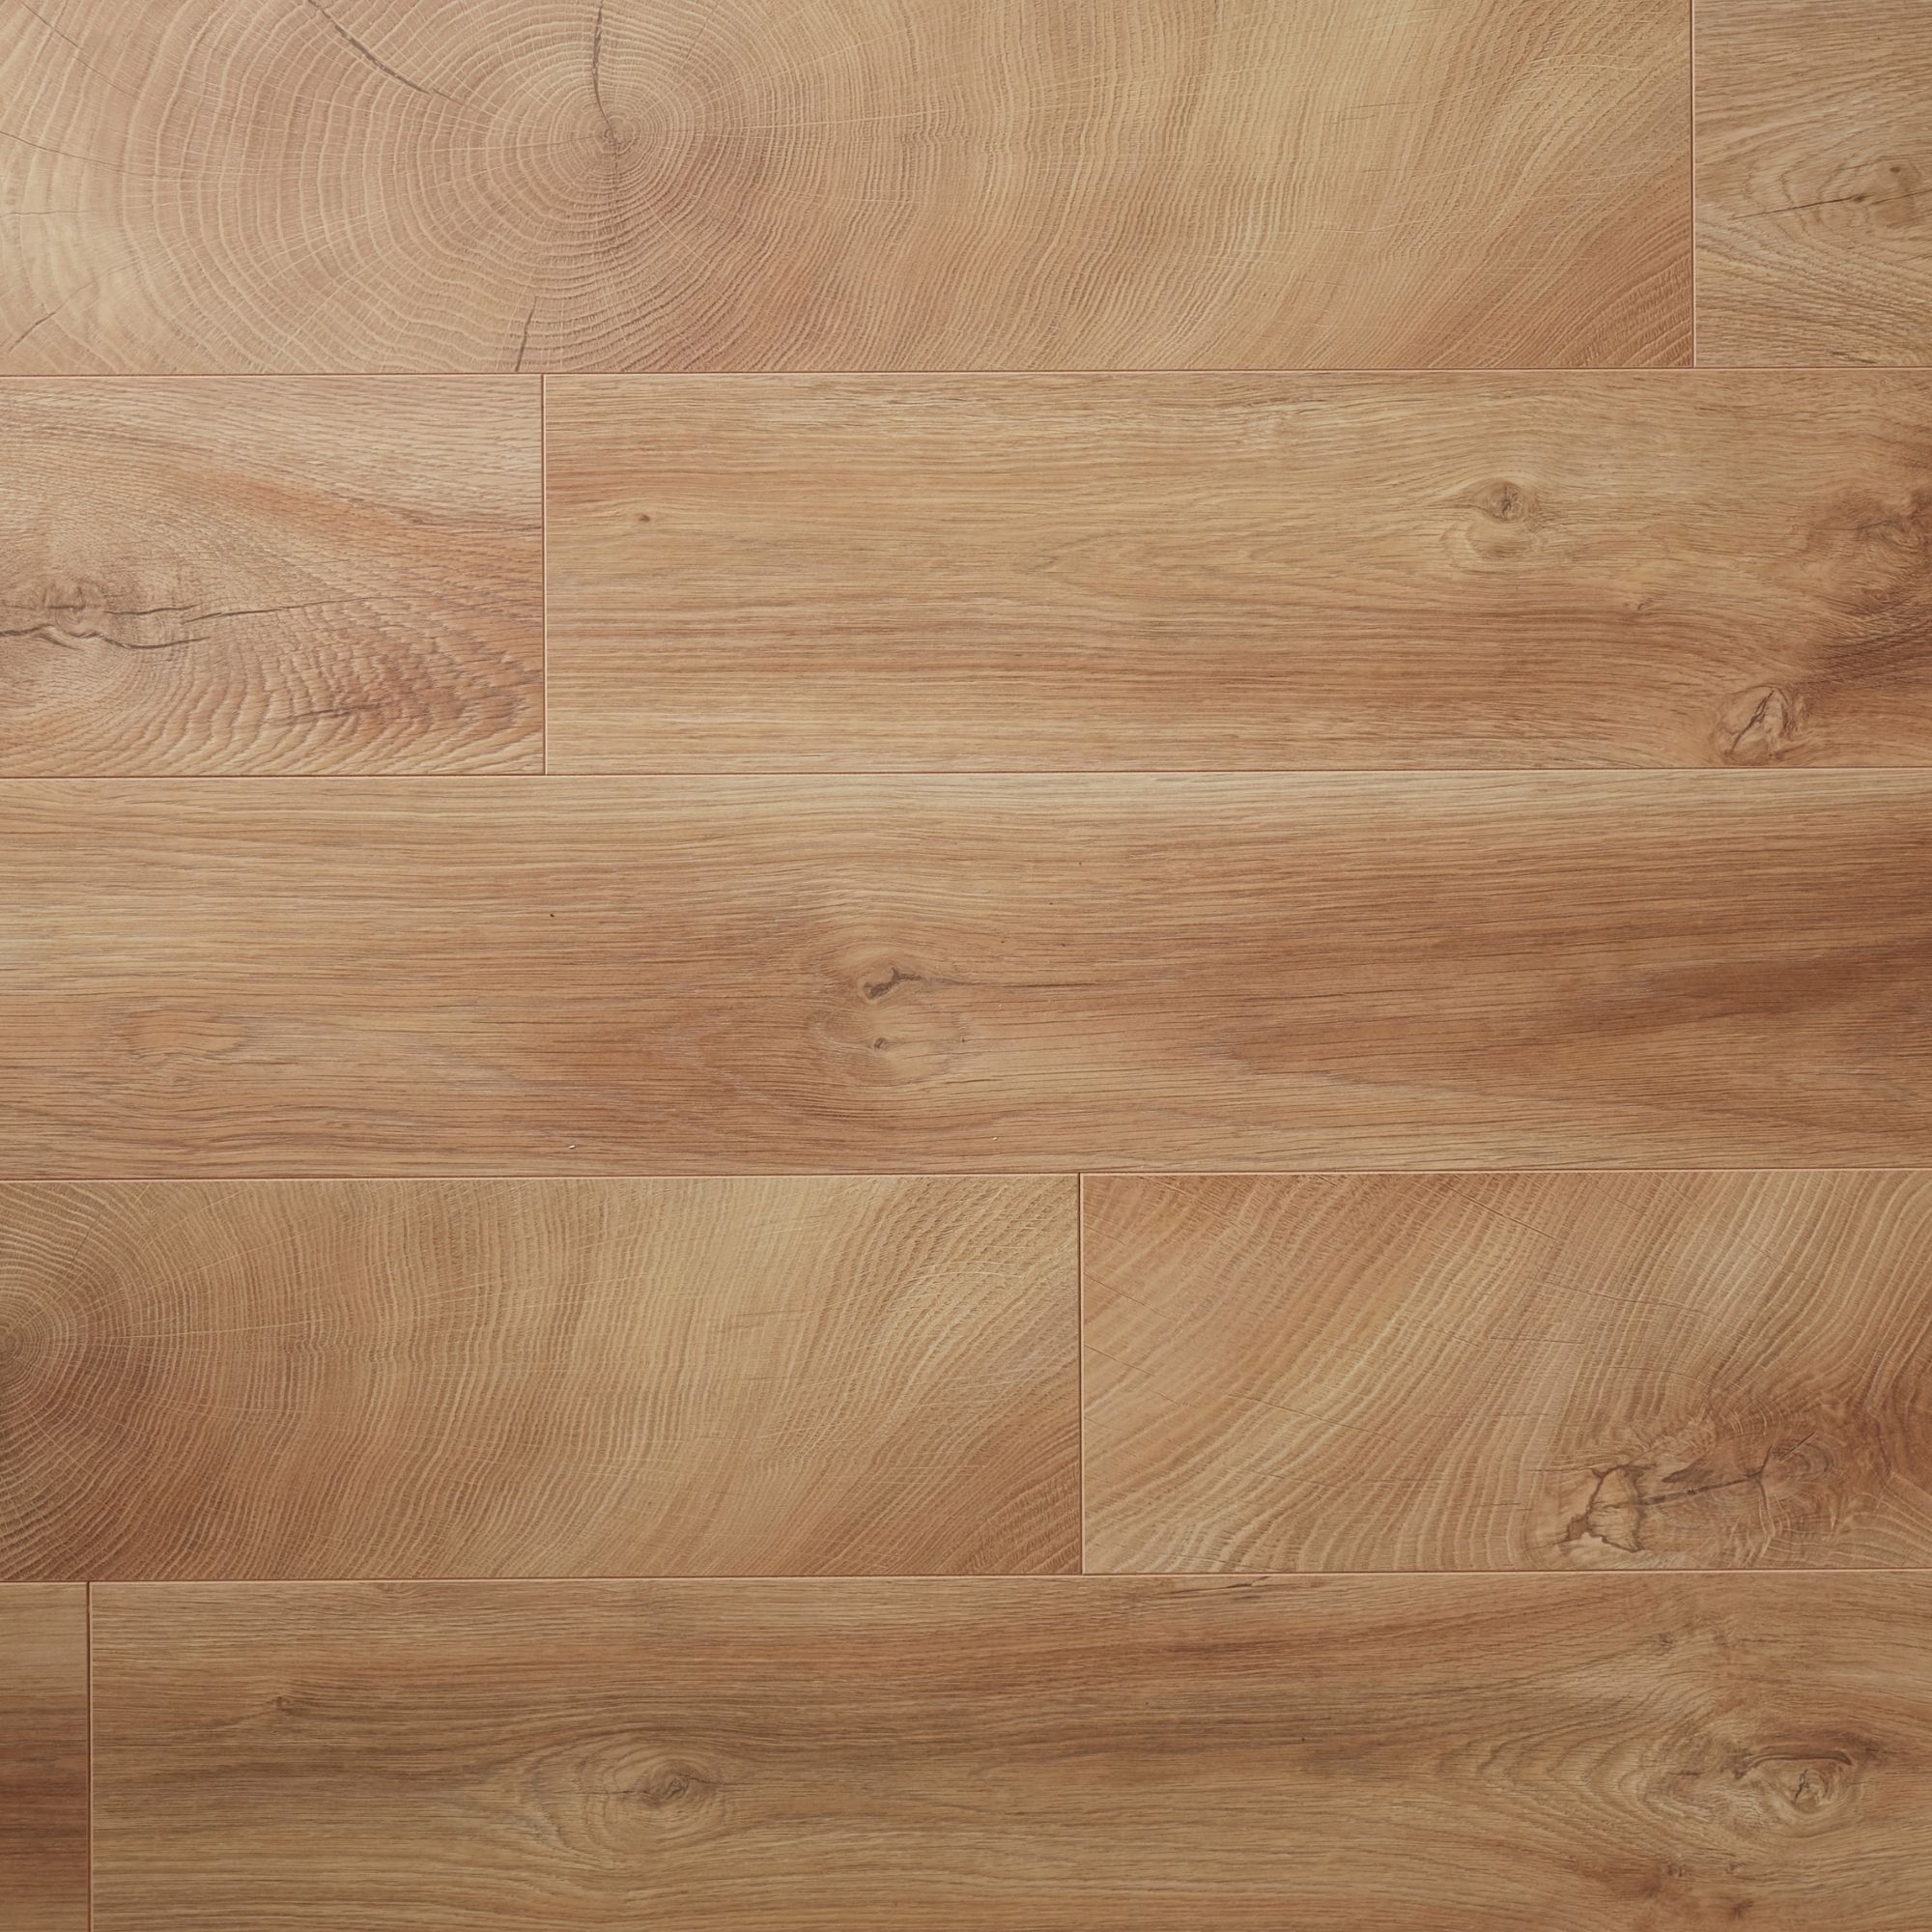 Lydney Natural Gloss Oak effect Laminate Flooring Sample